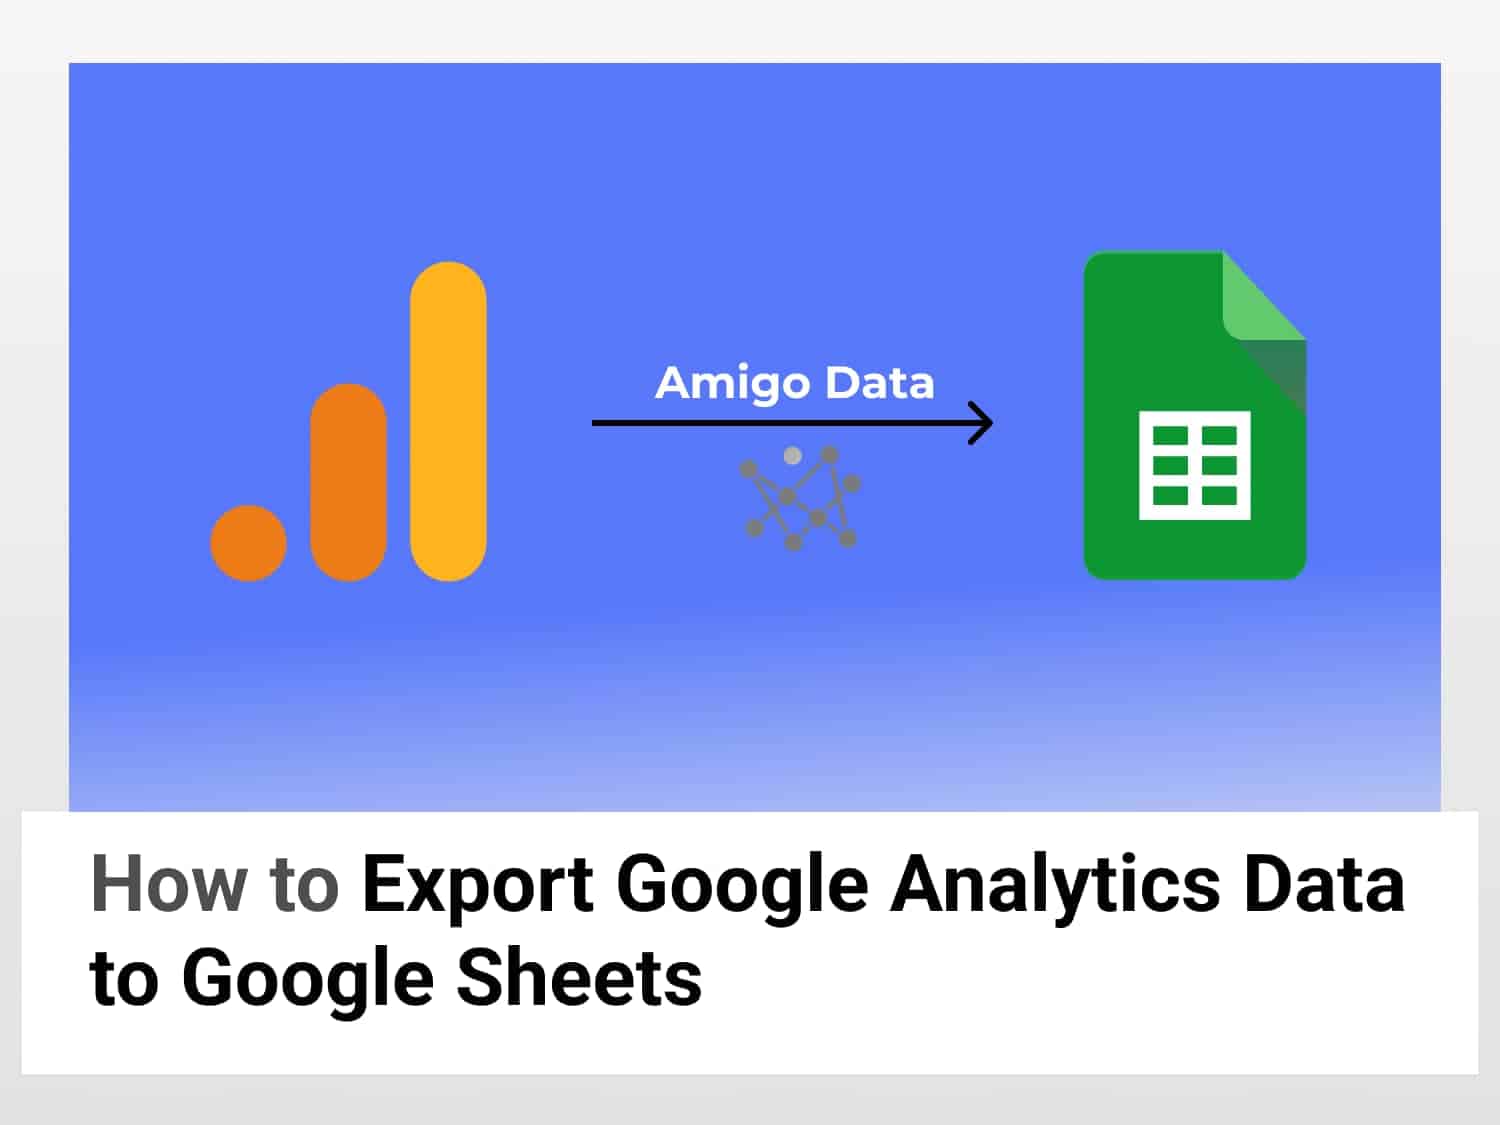 Export Google Analytics Data to Google Sheets